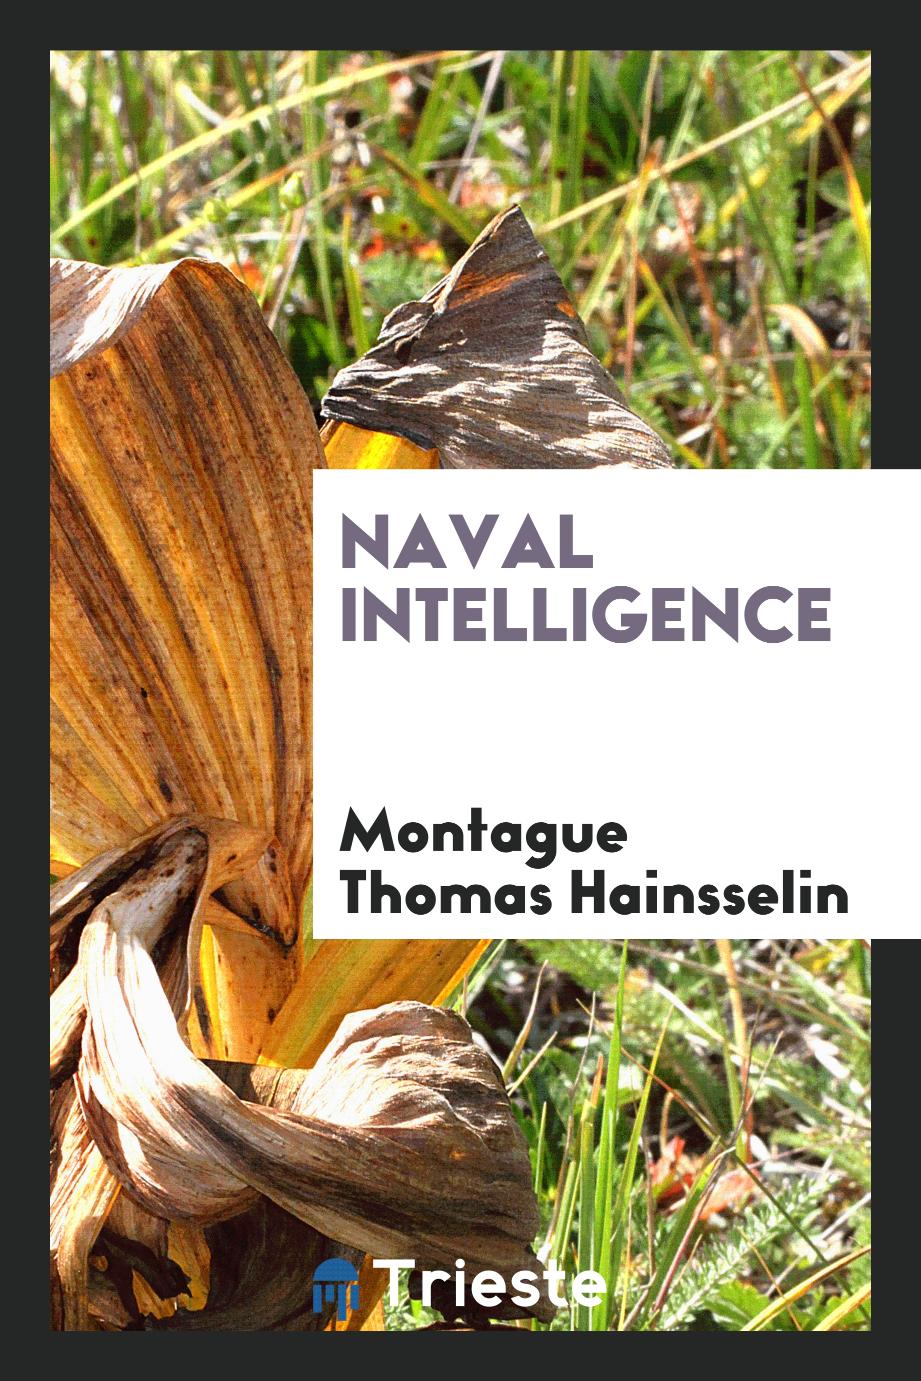 Naval intelligence